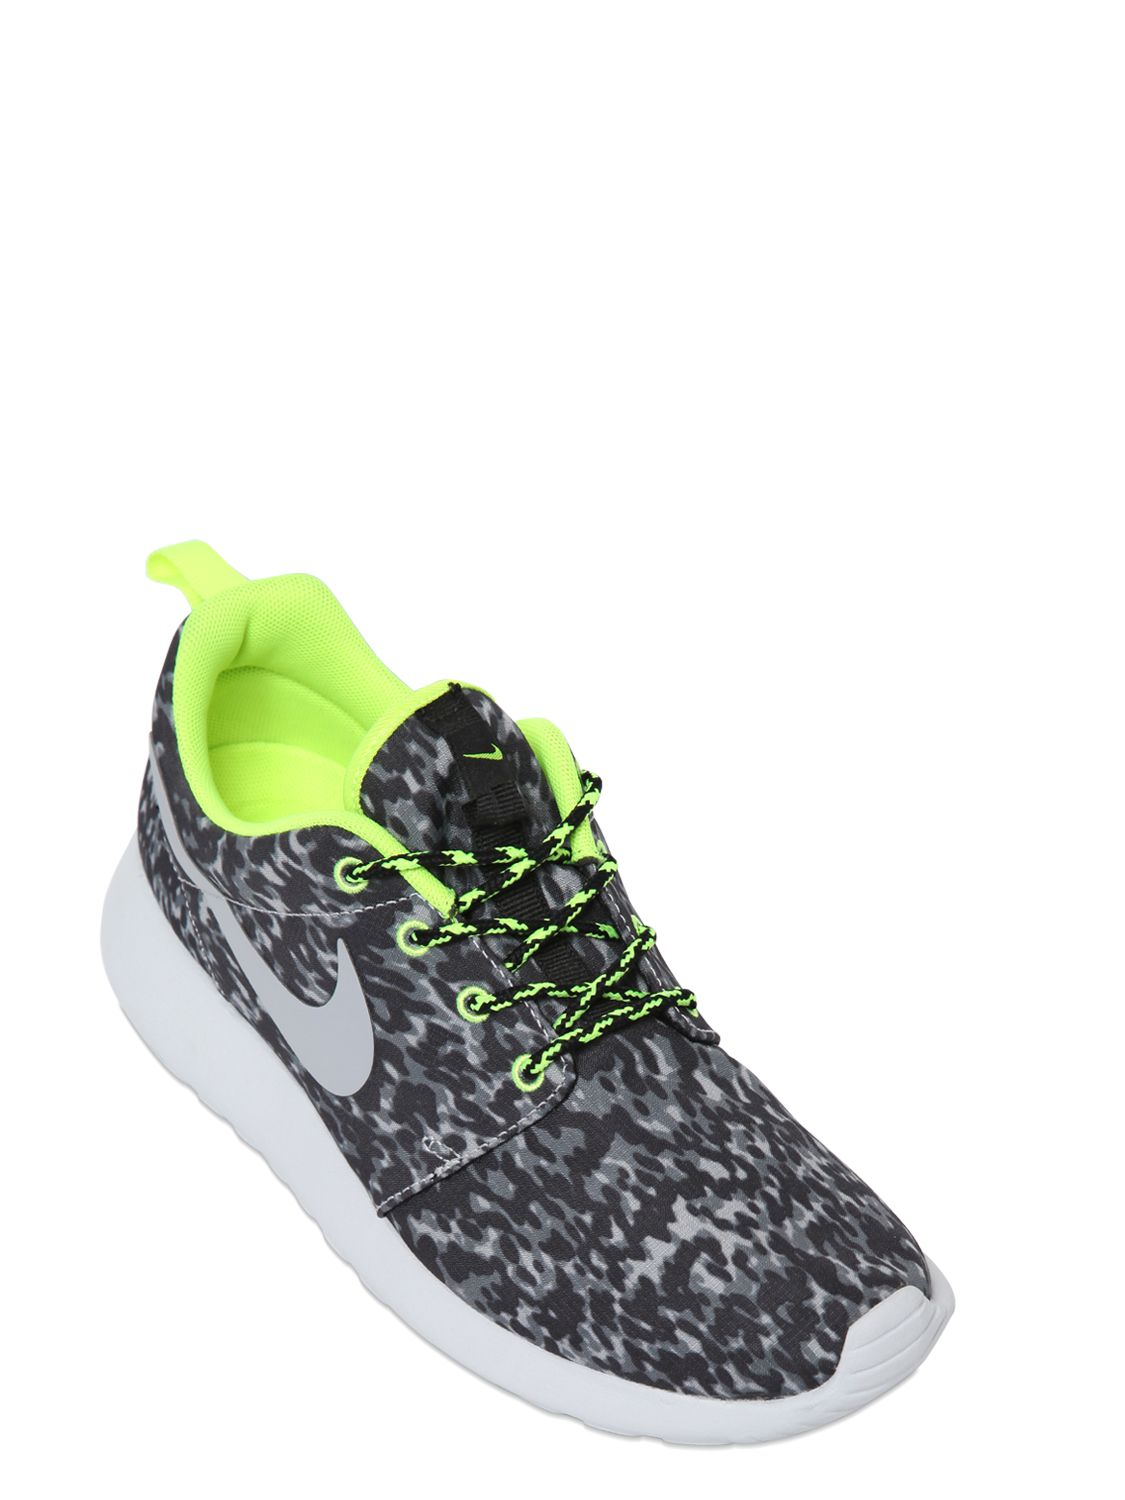 Nike Roshe Run Leopard Print Running Sneakers in Gray | Lyst